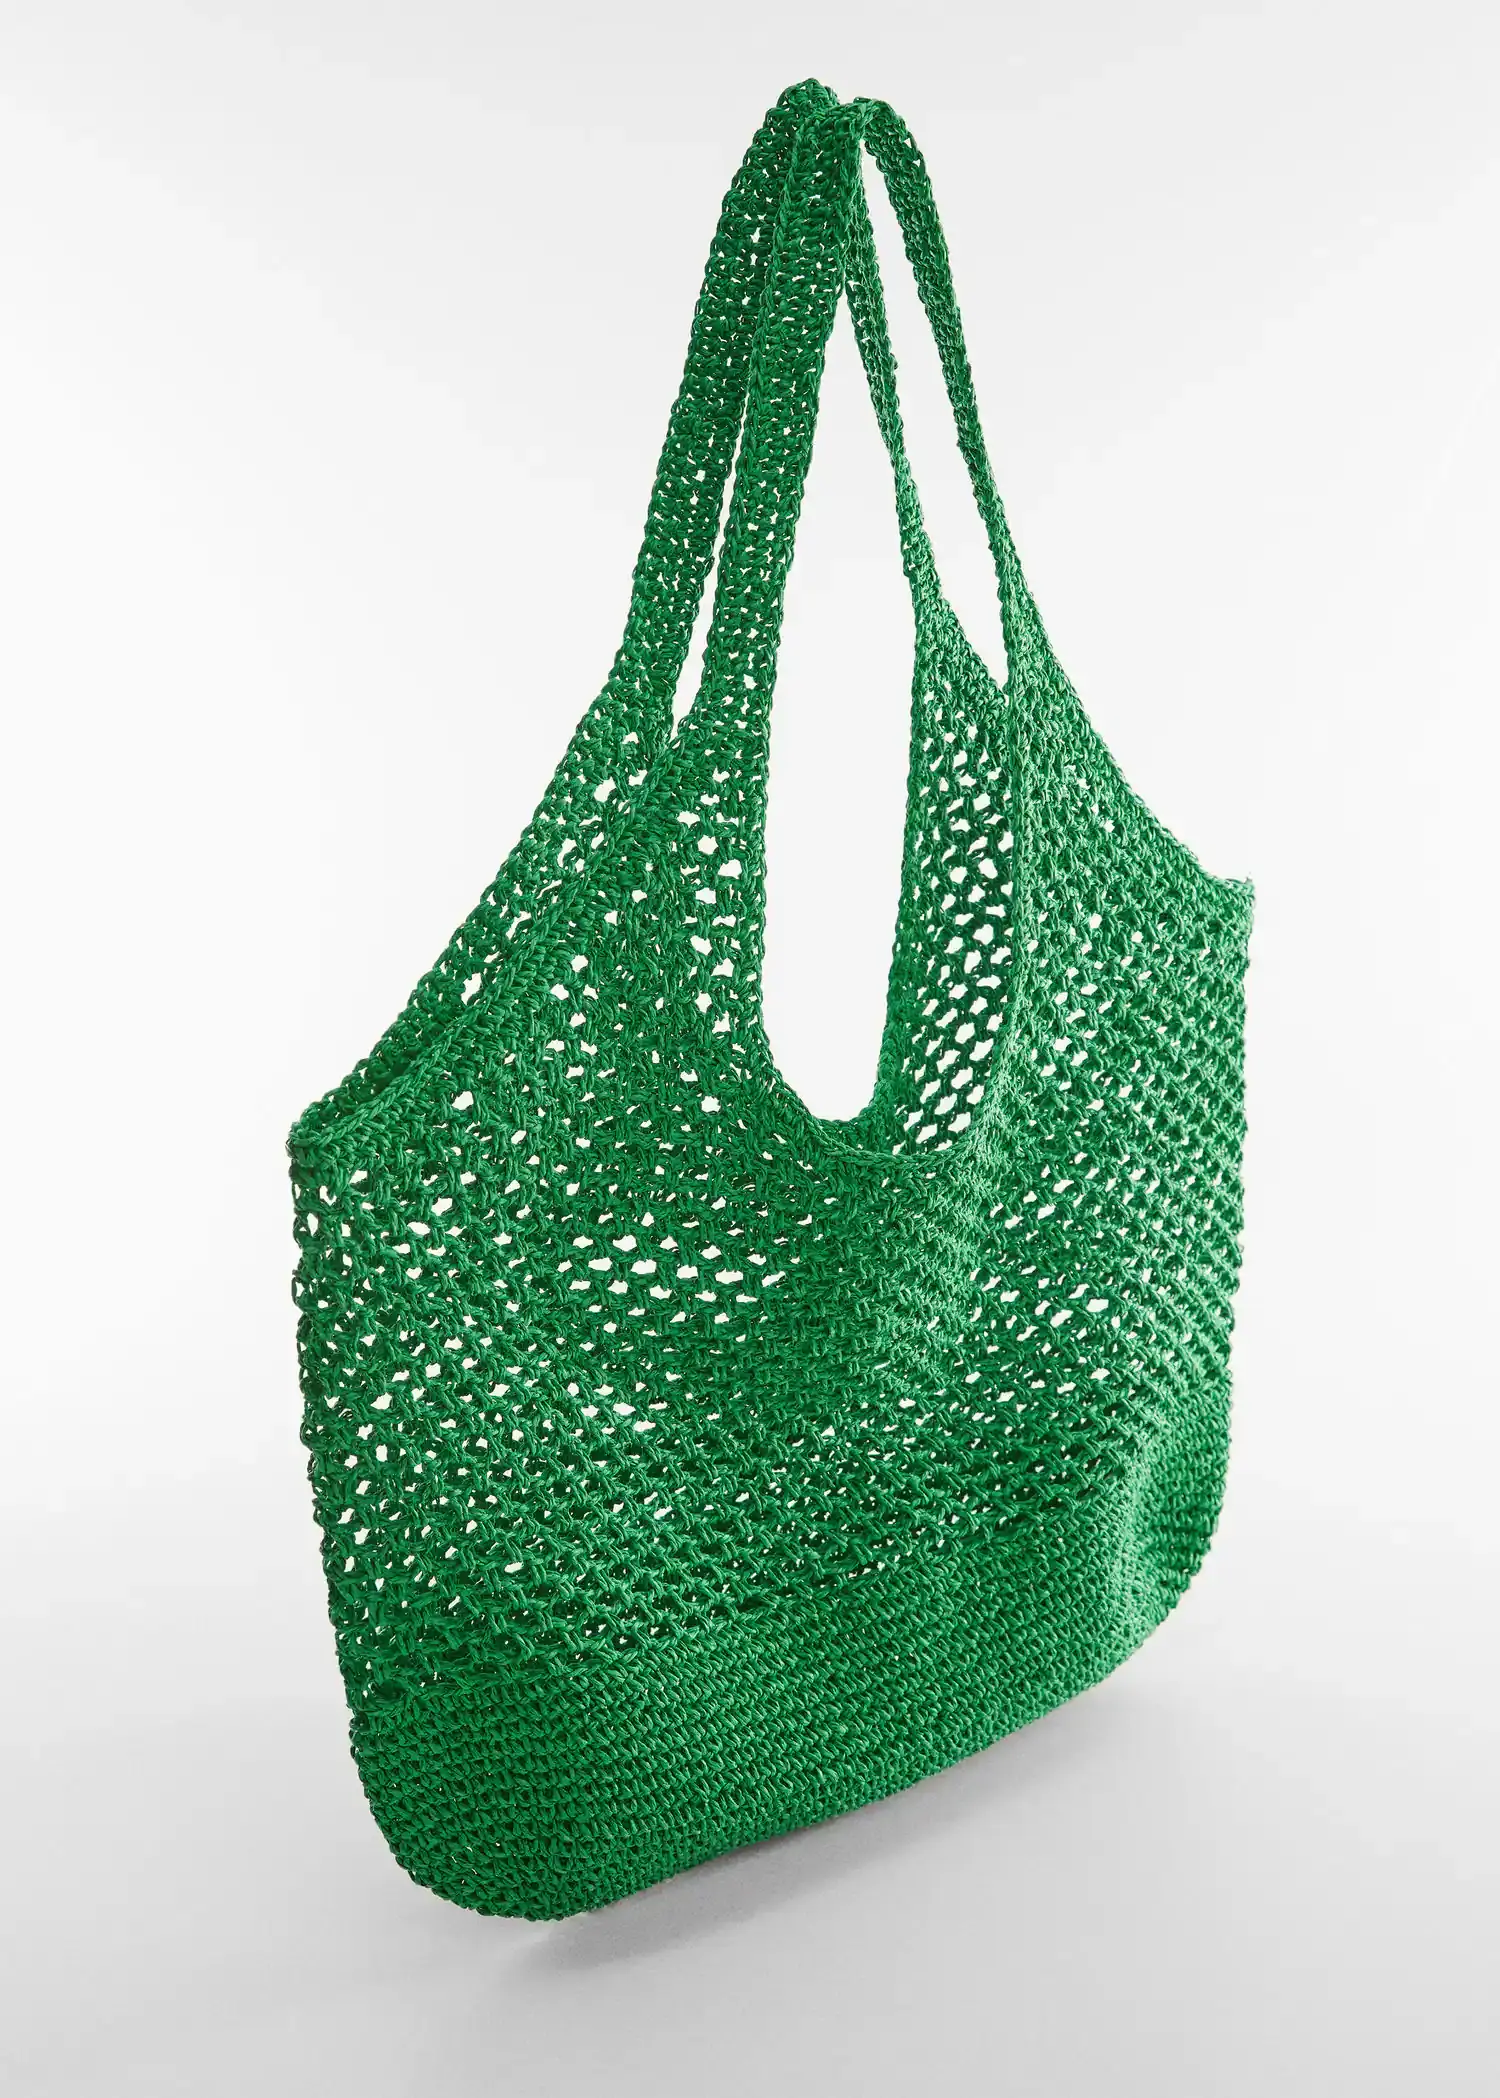 Mango Natural fiber sack bag. a crocheted green bag on a white surface. 